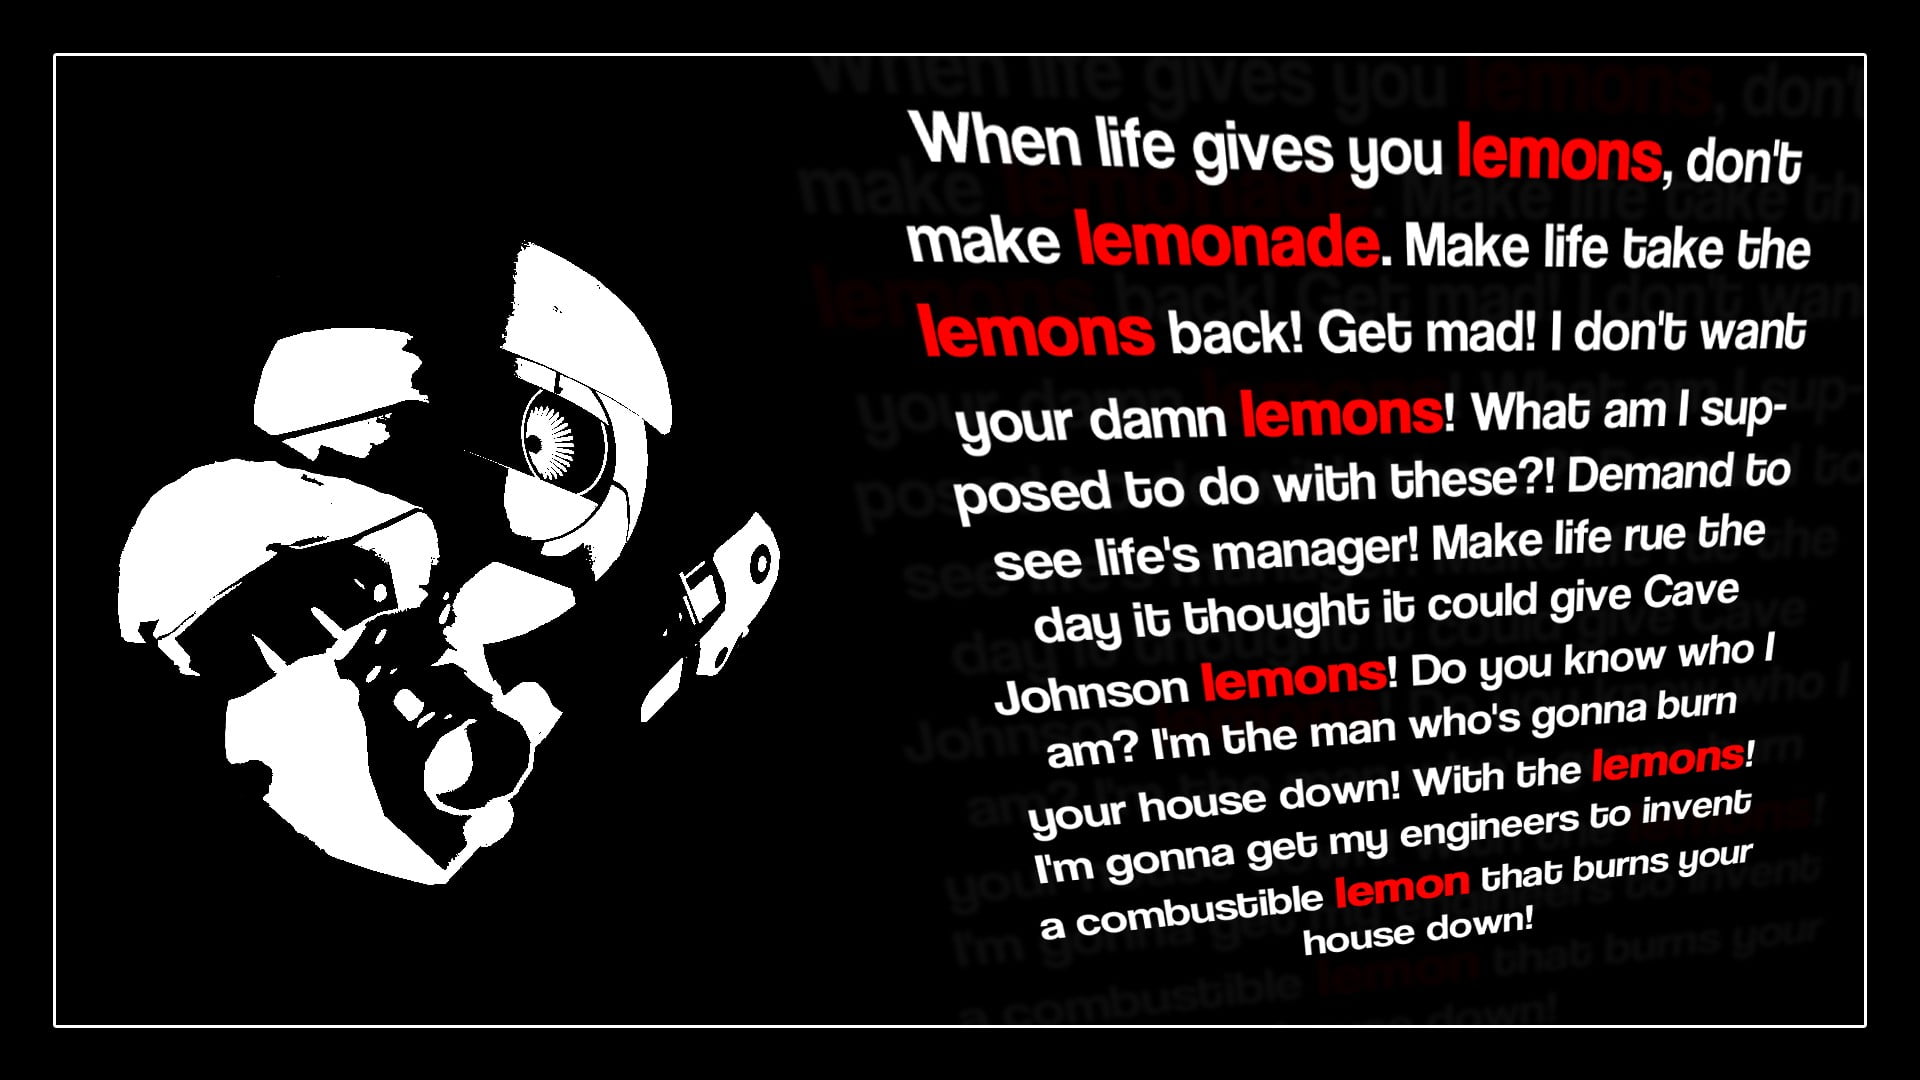 when life gives you lemons, don't make lemonade text, Portal (game), Portal 2, Cave Johnson, quote